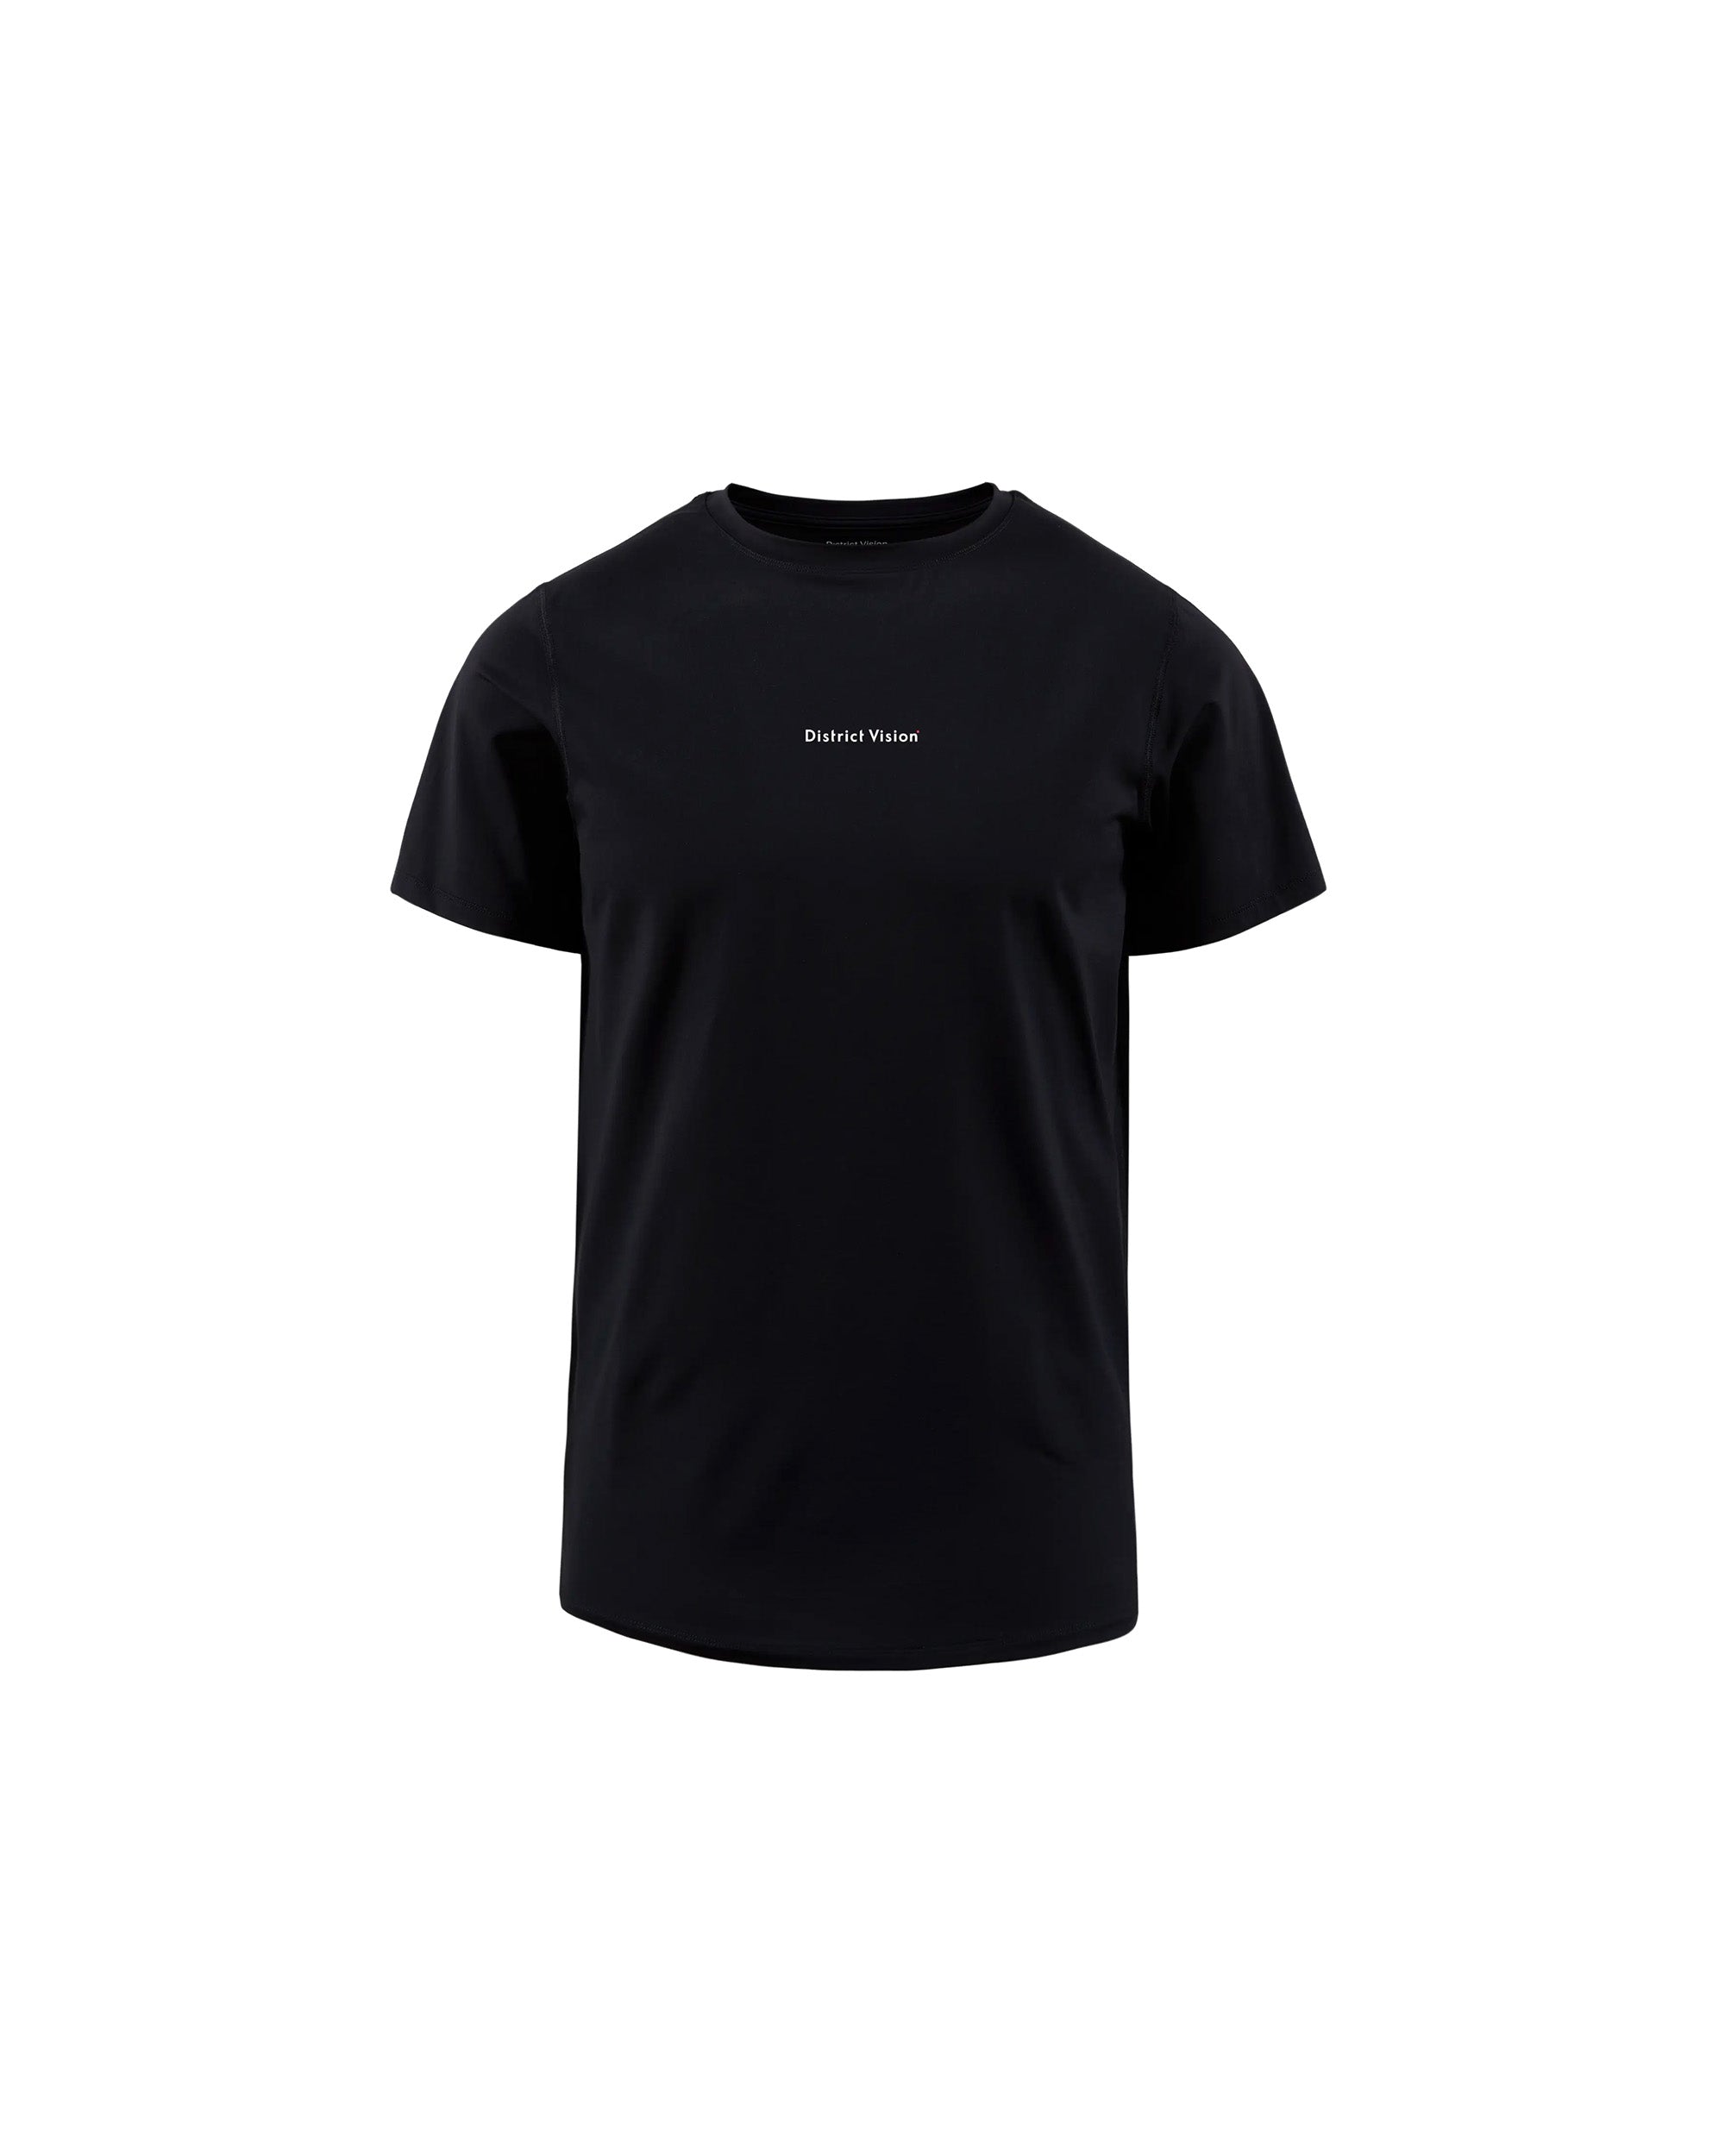 Aloe S/S T-Shirt - Black